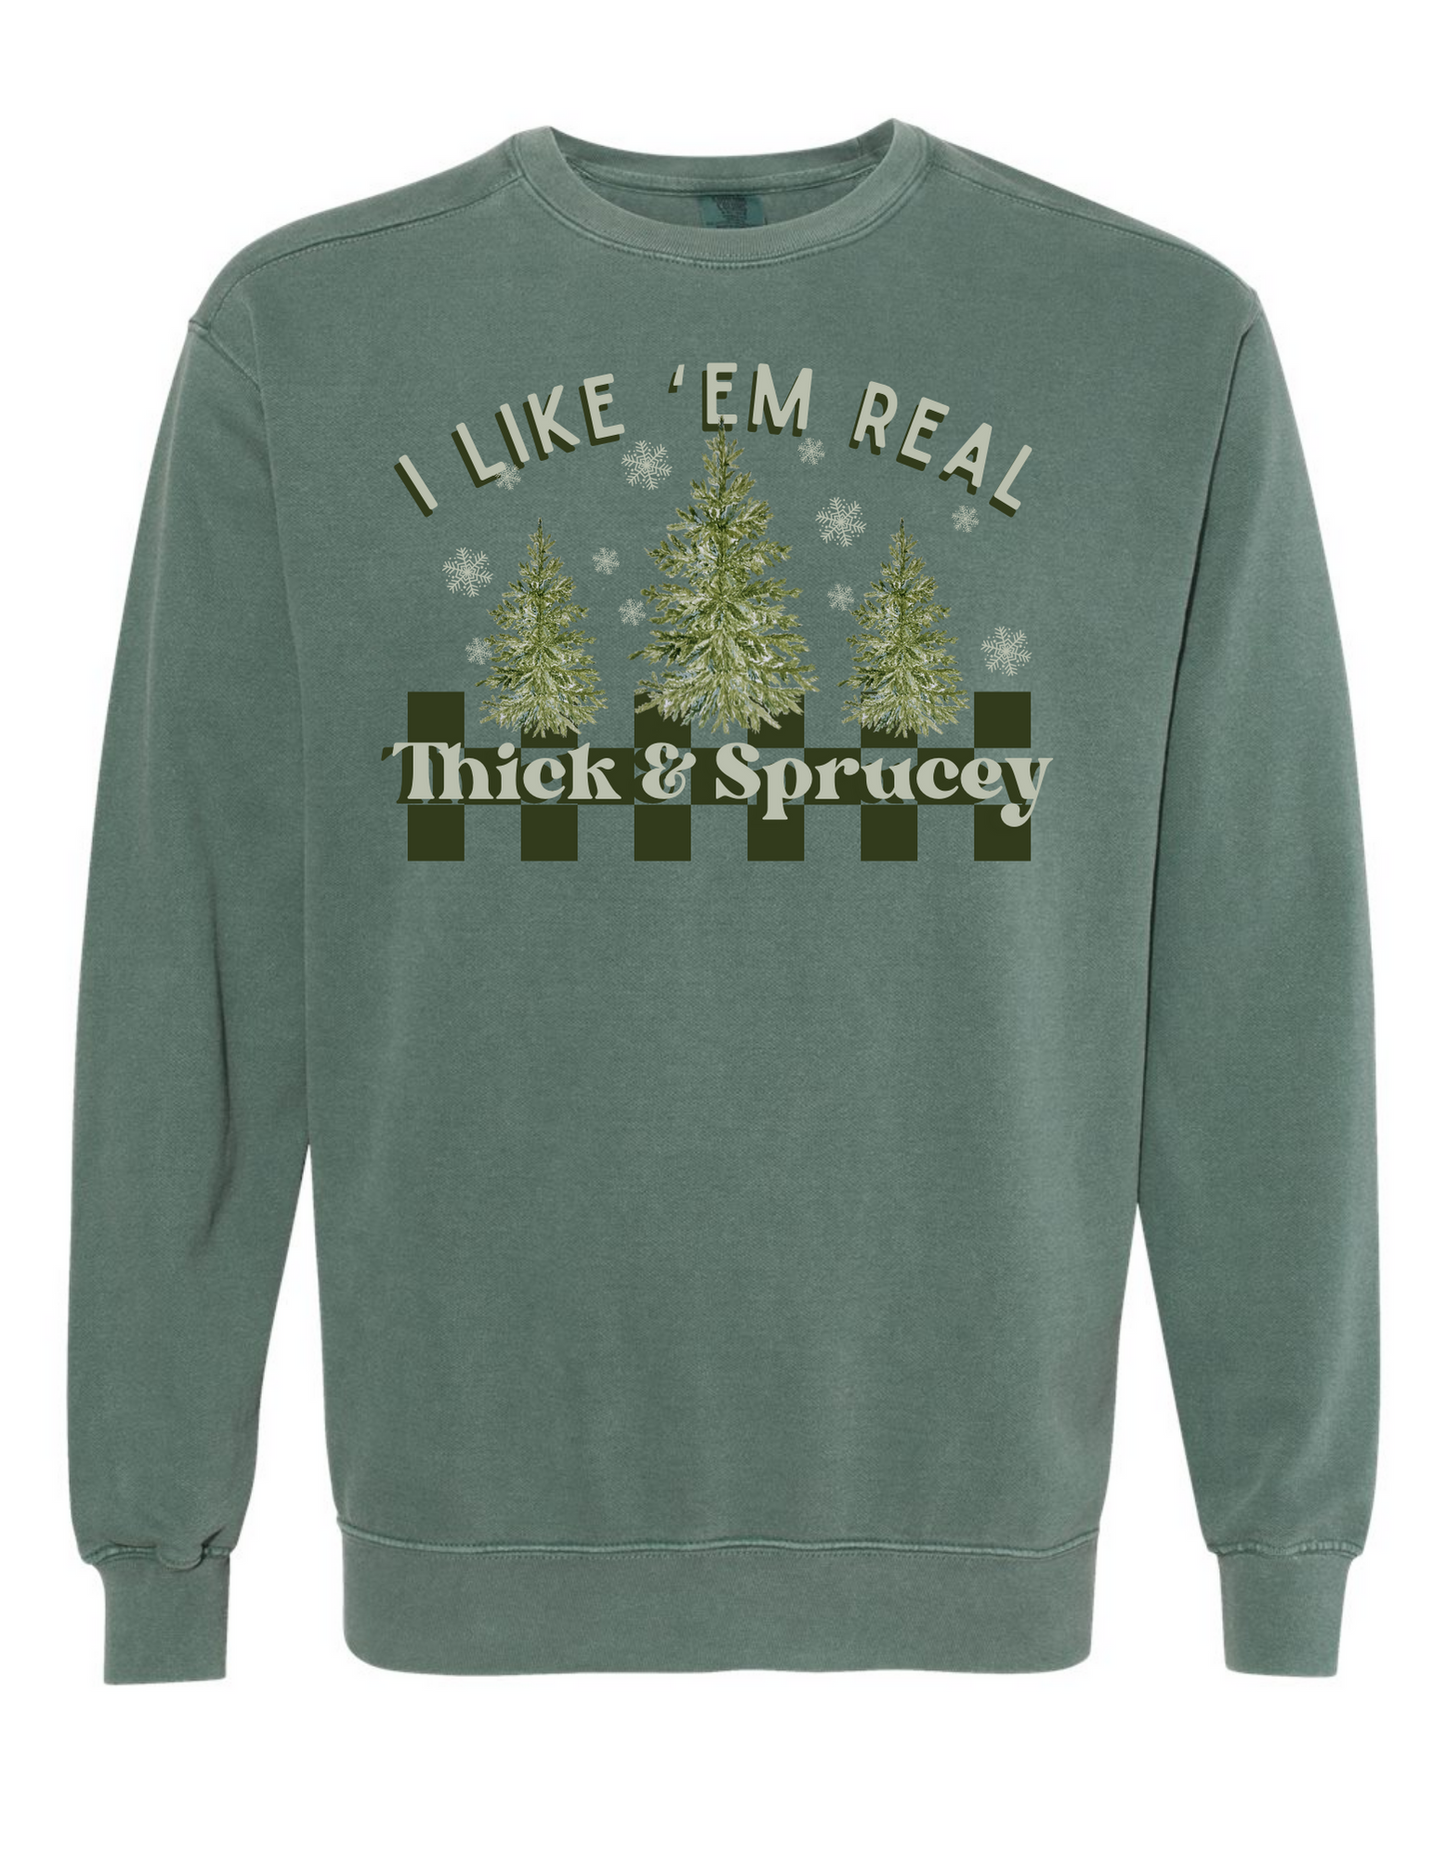 Thick & Sprucey sweatshirt